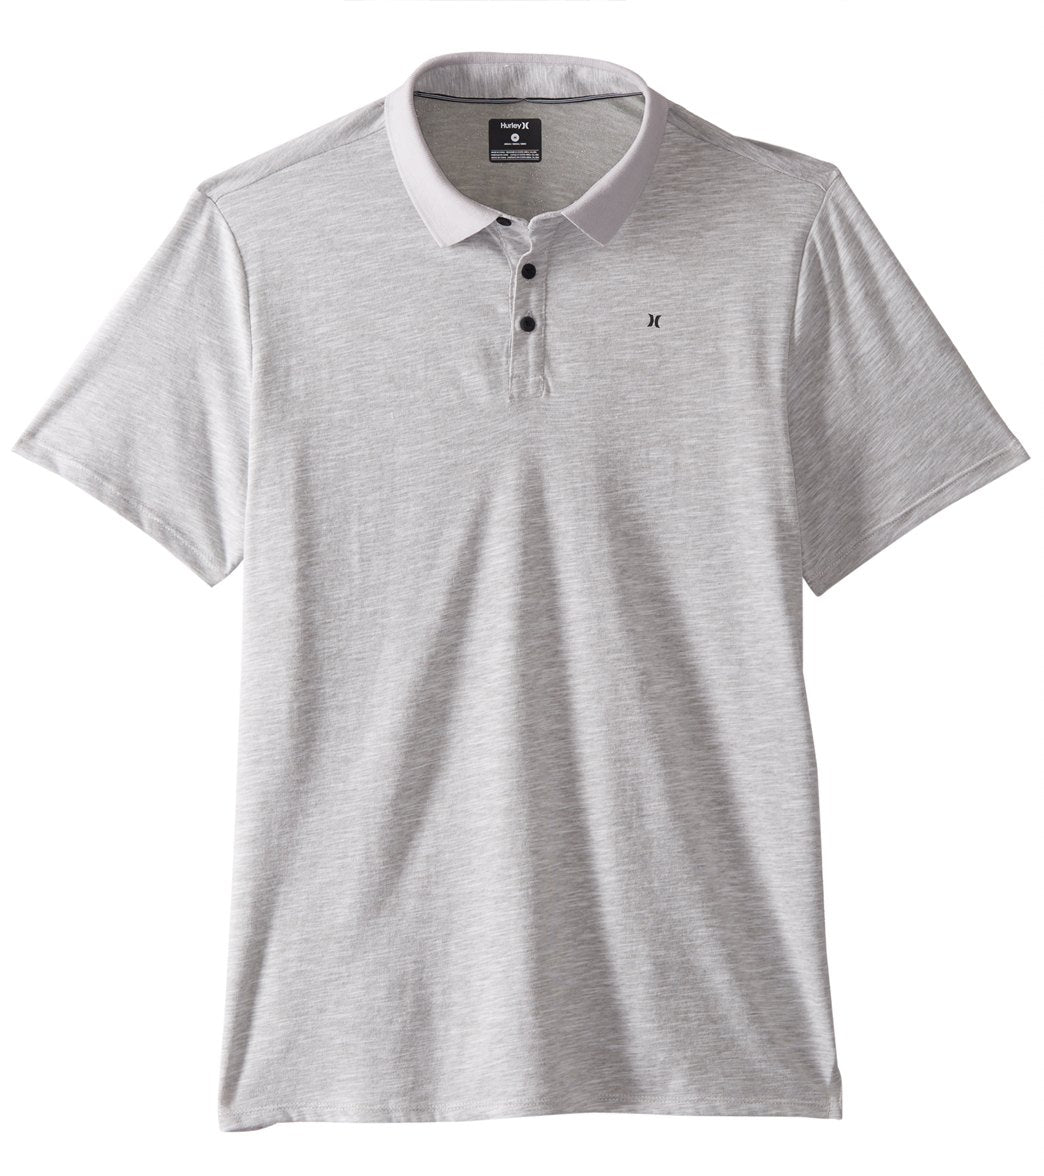 Hurley Men's Dri-Fit Lagos Polo Short Sleeve Shirt - Light Bone Small Cotton/Polyester - Swimoutlet.com